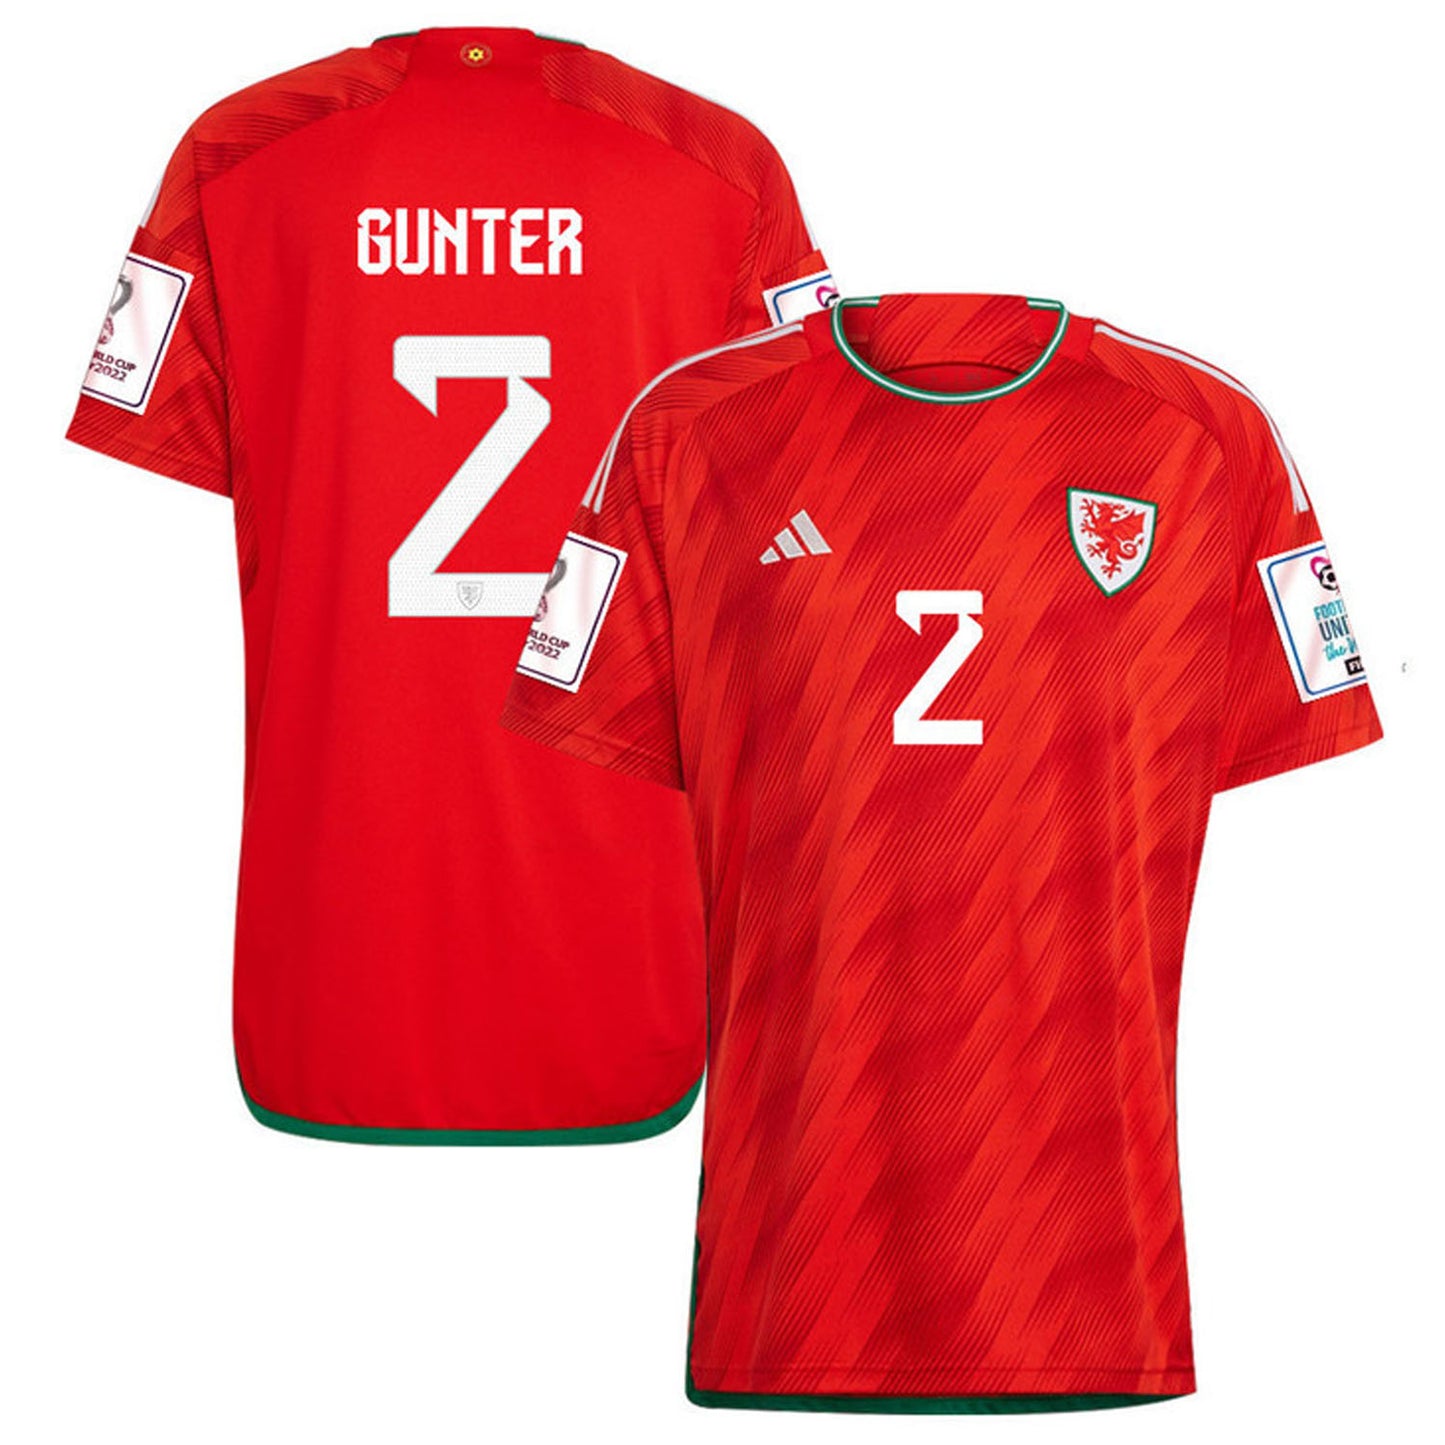 Chris Gunter Wales 2 Fifa World Cup Jersey